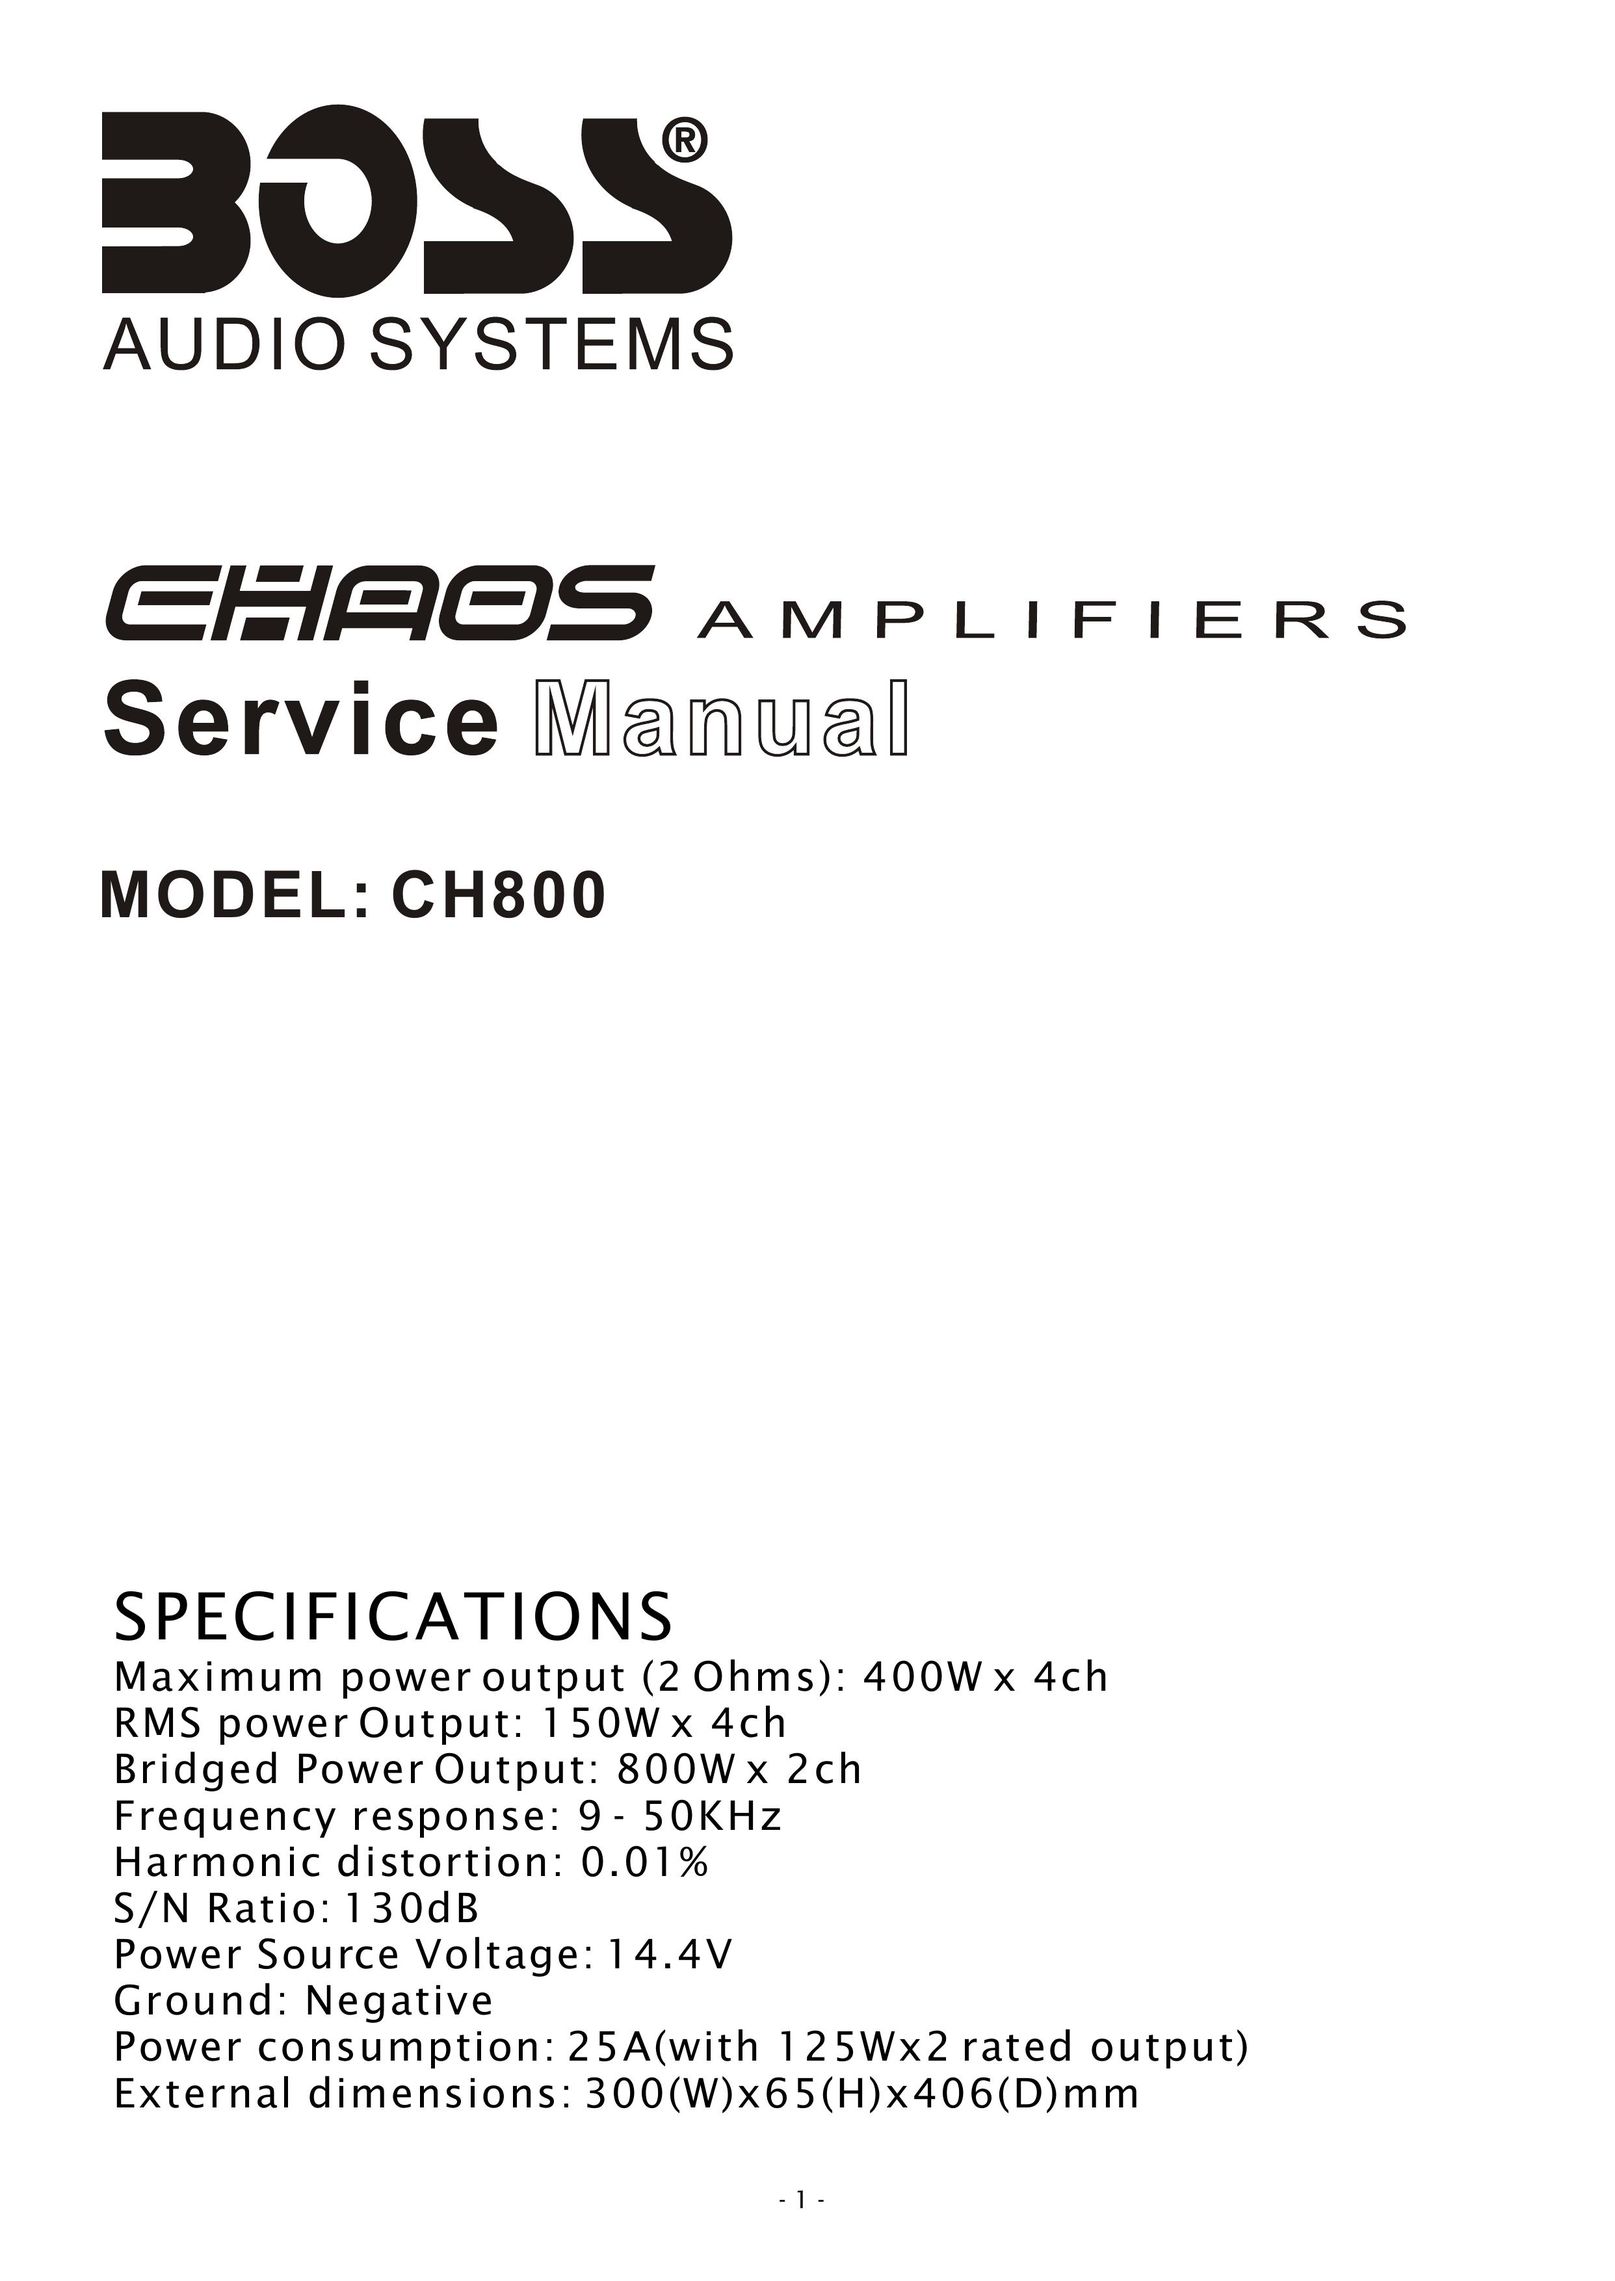 Boss Audio Systems CH800 Car Amplifier User Manual